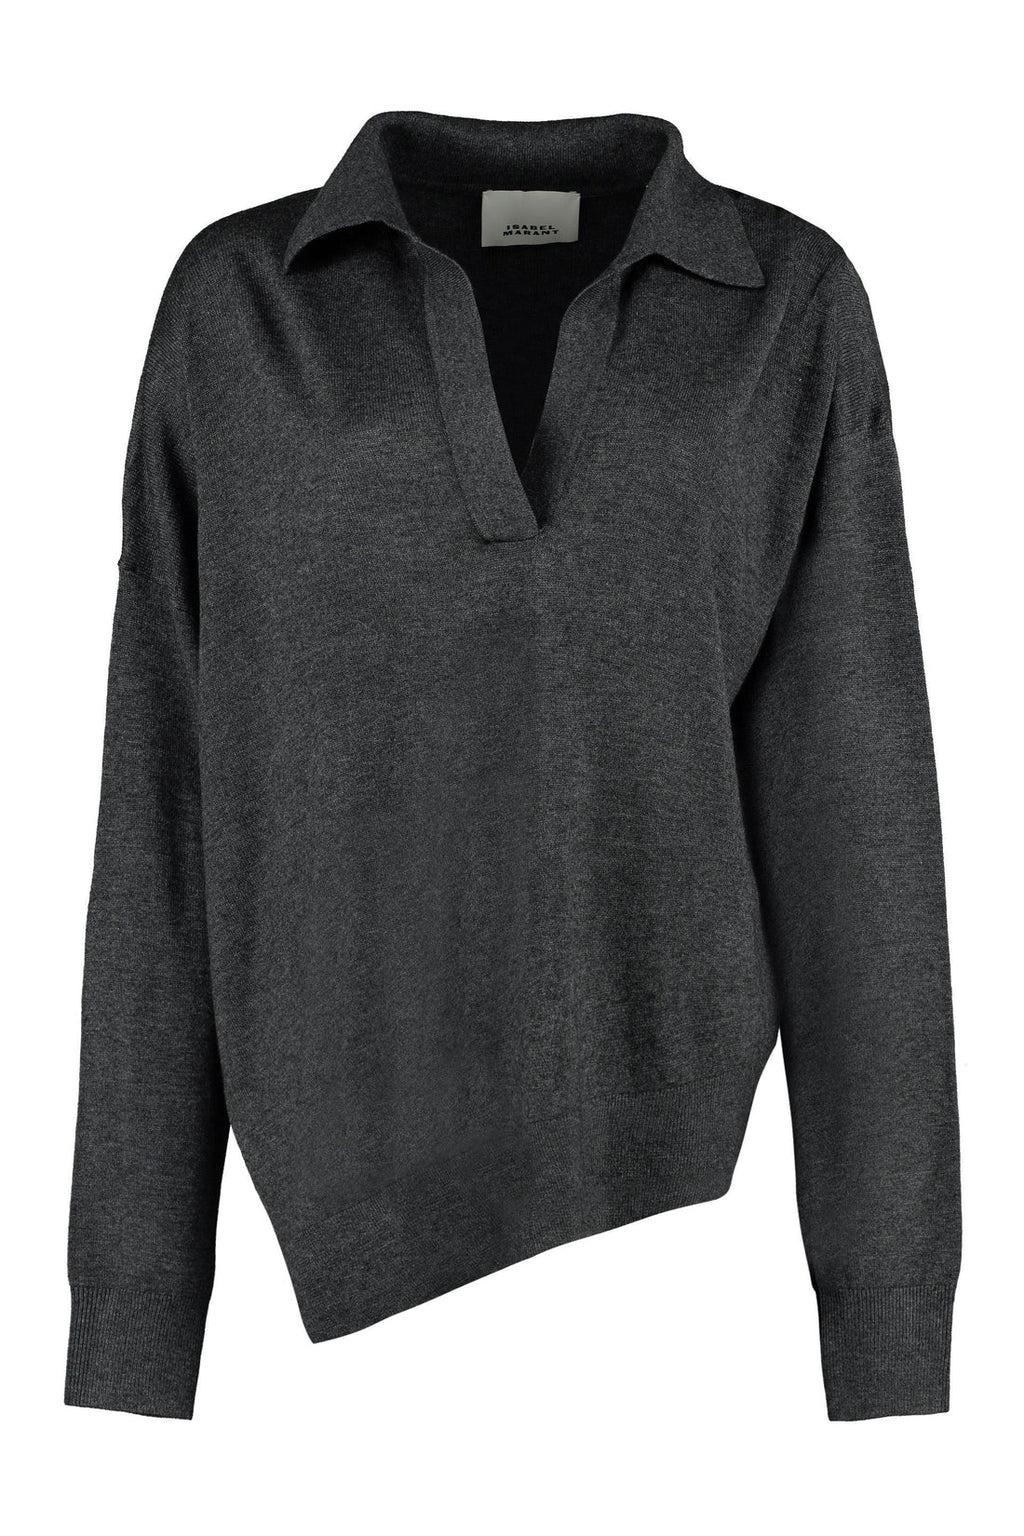 Isabel Marant-OUTLET-SALE-Giliane wool blend sweater-ARCHIVIST